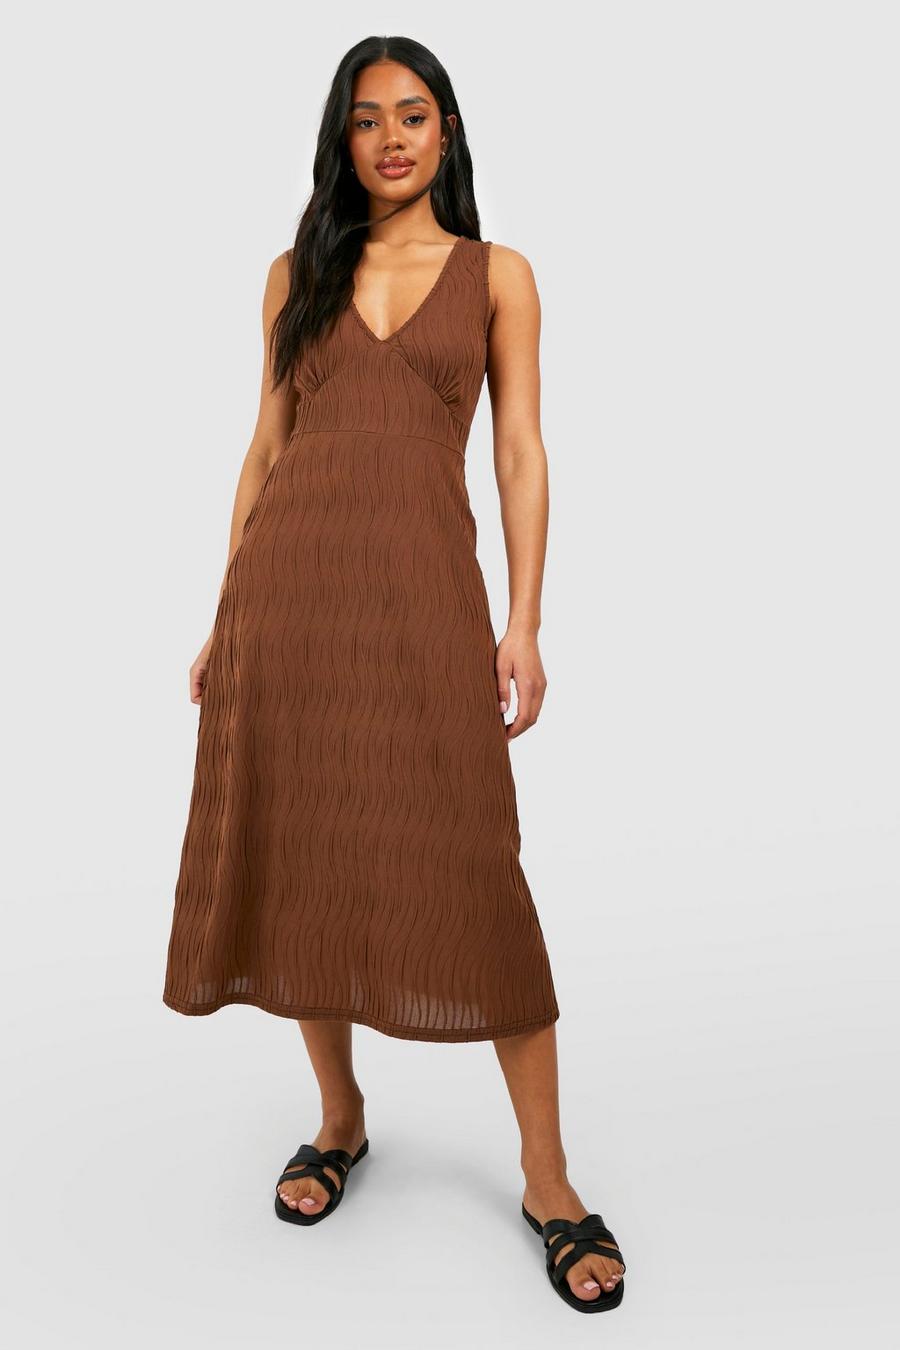 Chocolate brown Textured Wave Rib Midi Dress